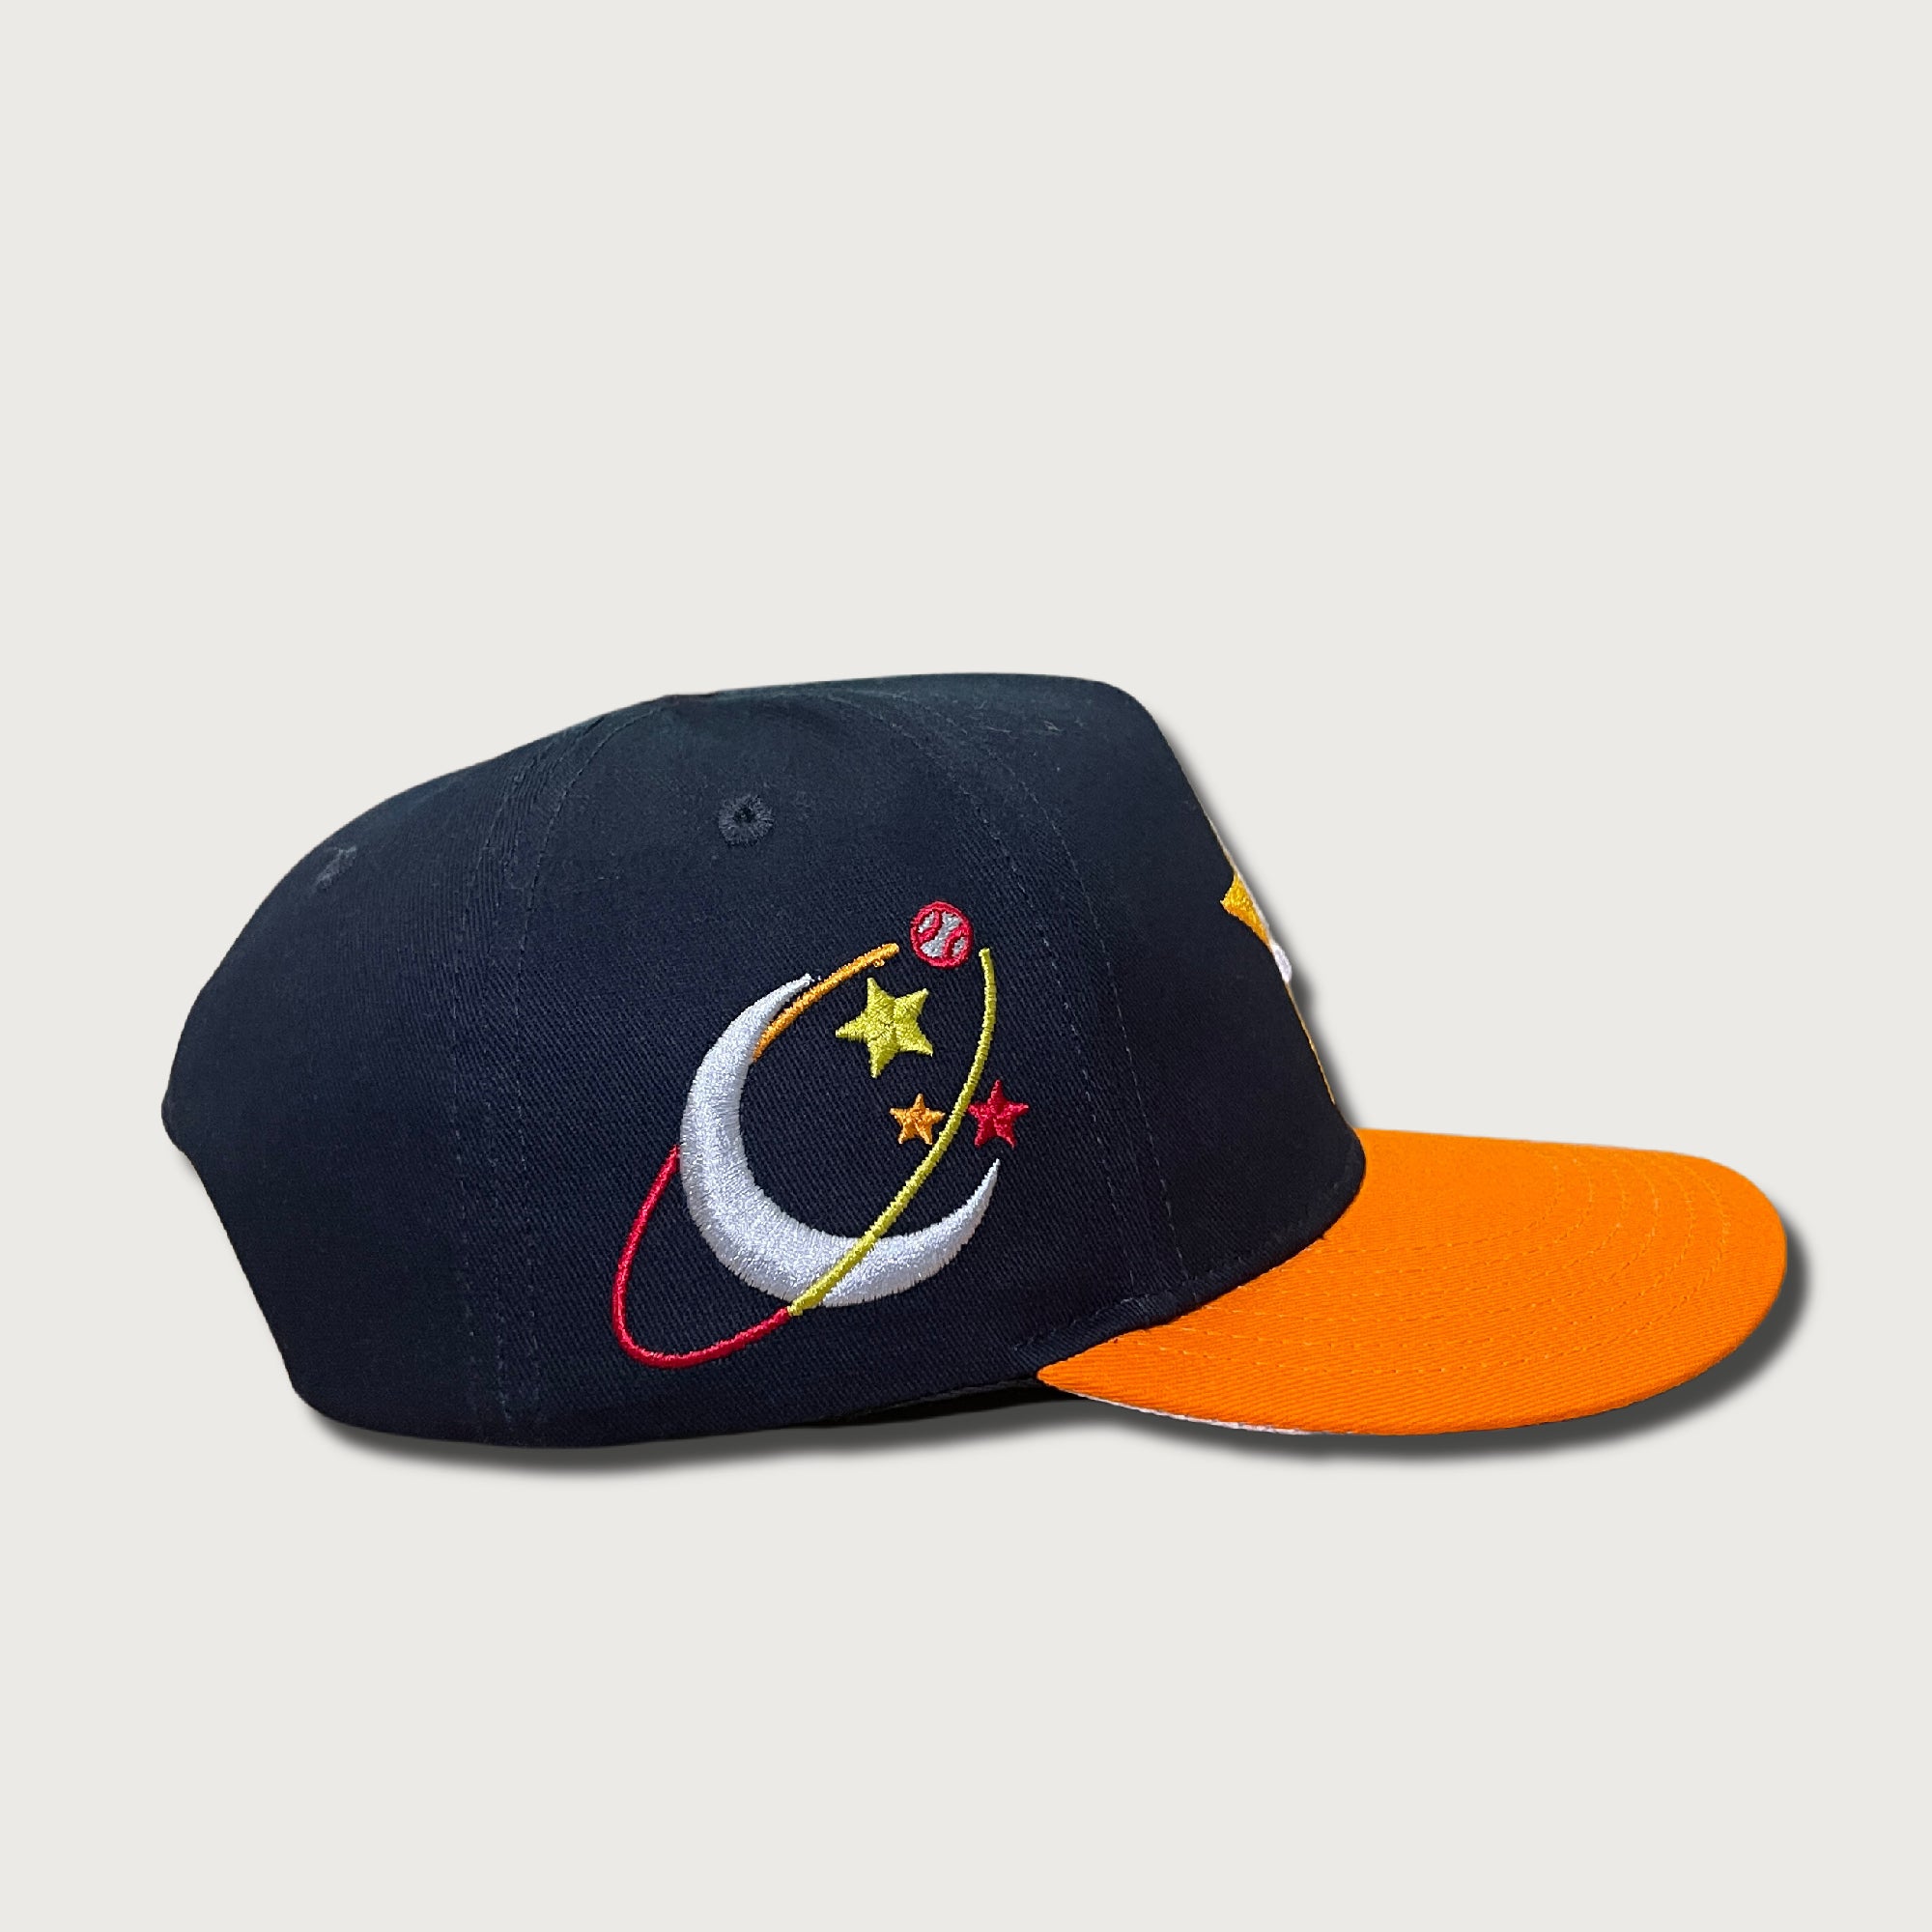 Houston هـ - Town Arabic Calligraphy Baseball Hat - Astro’labes - 2tone